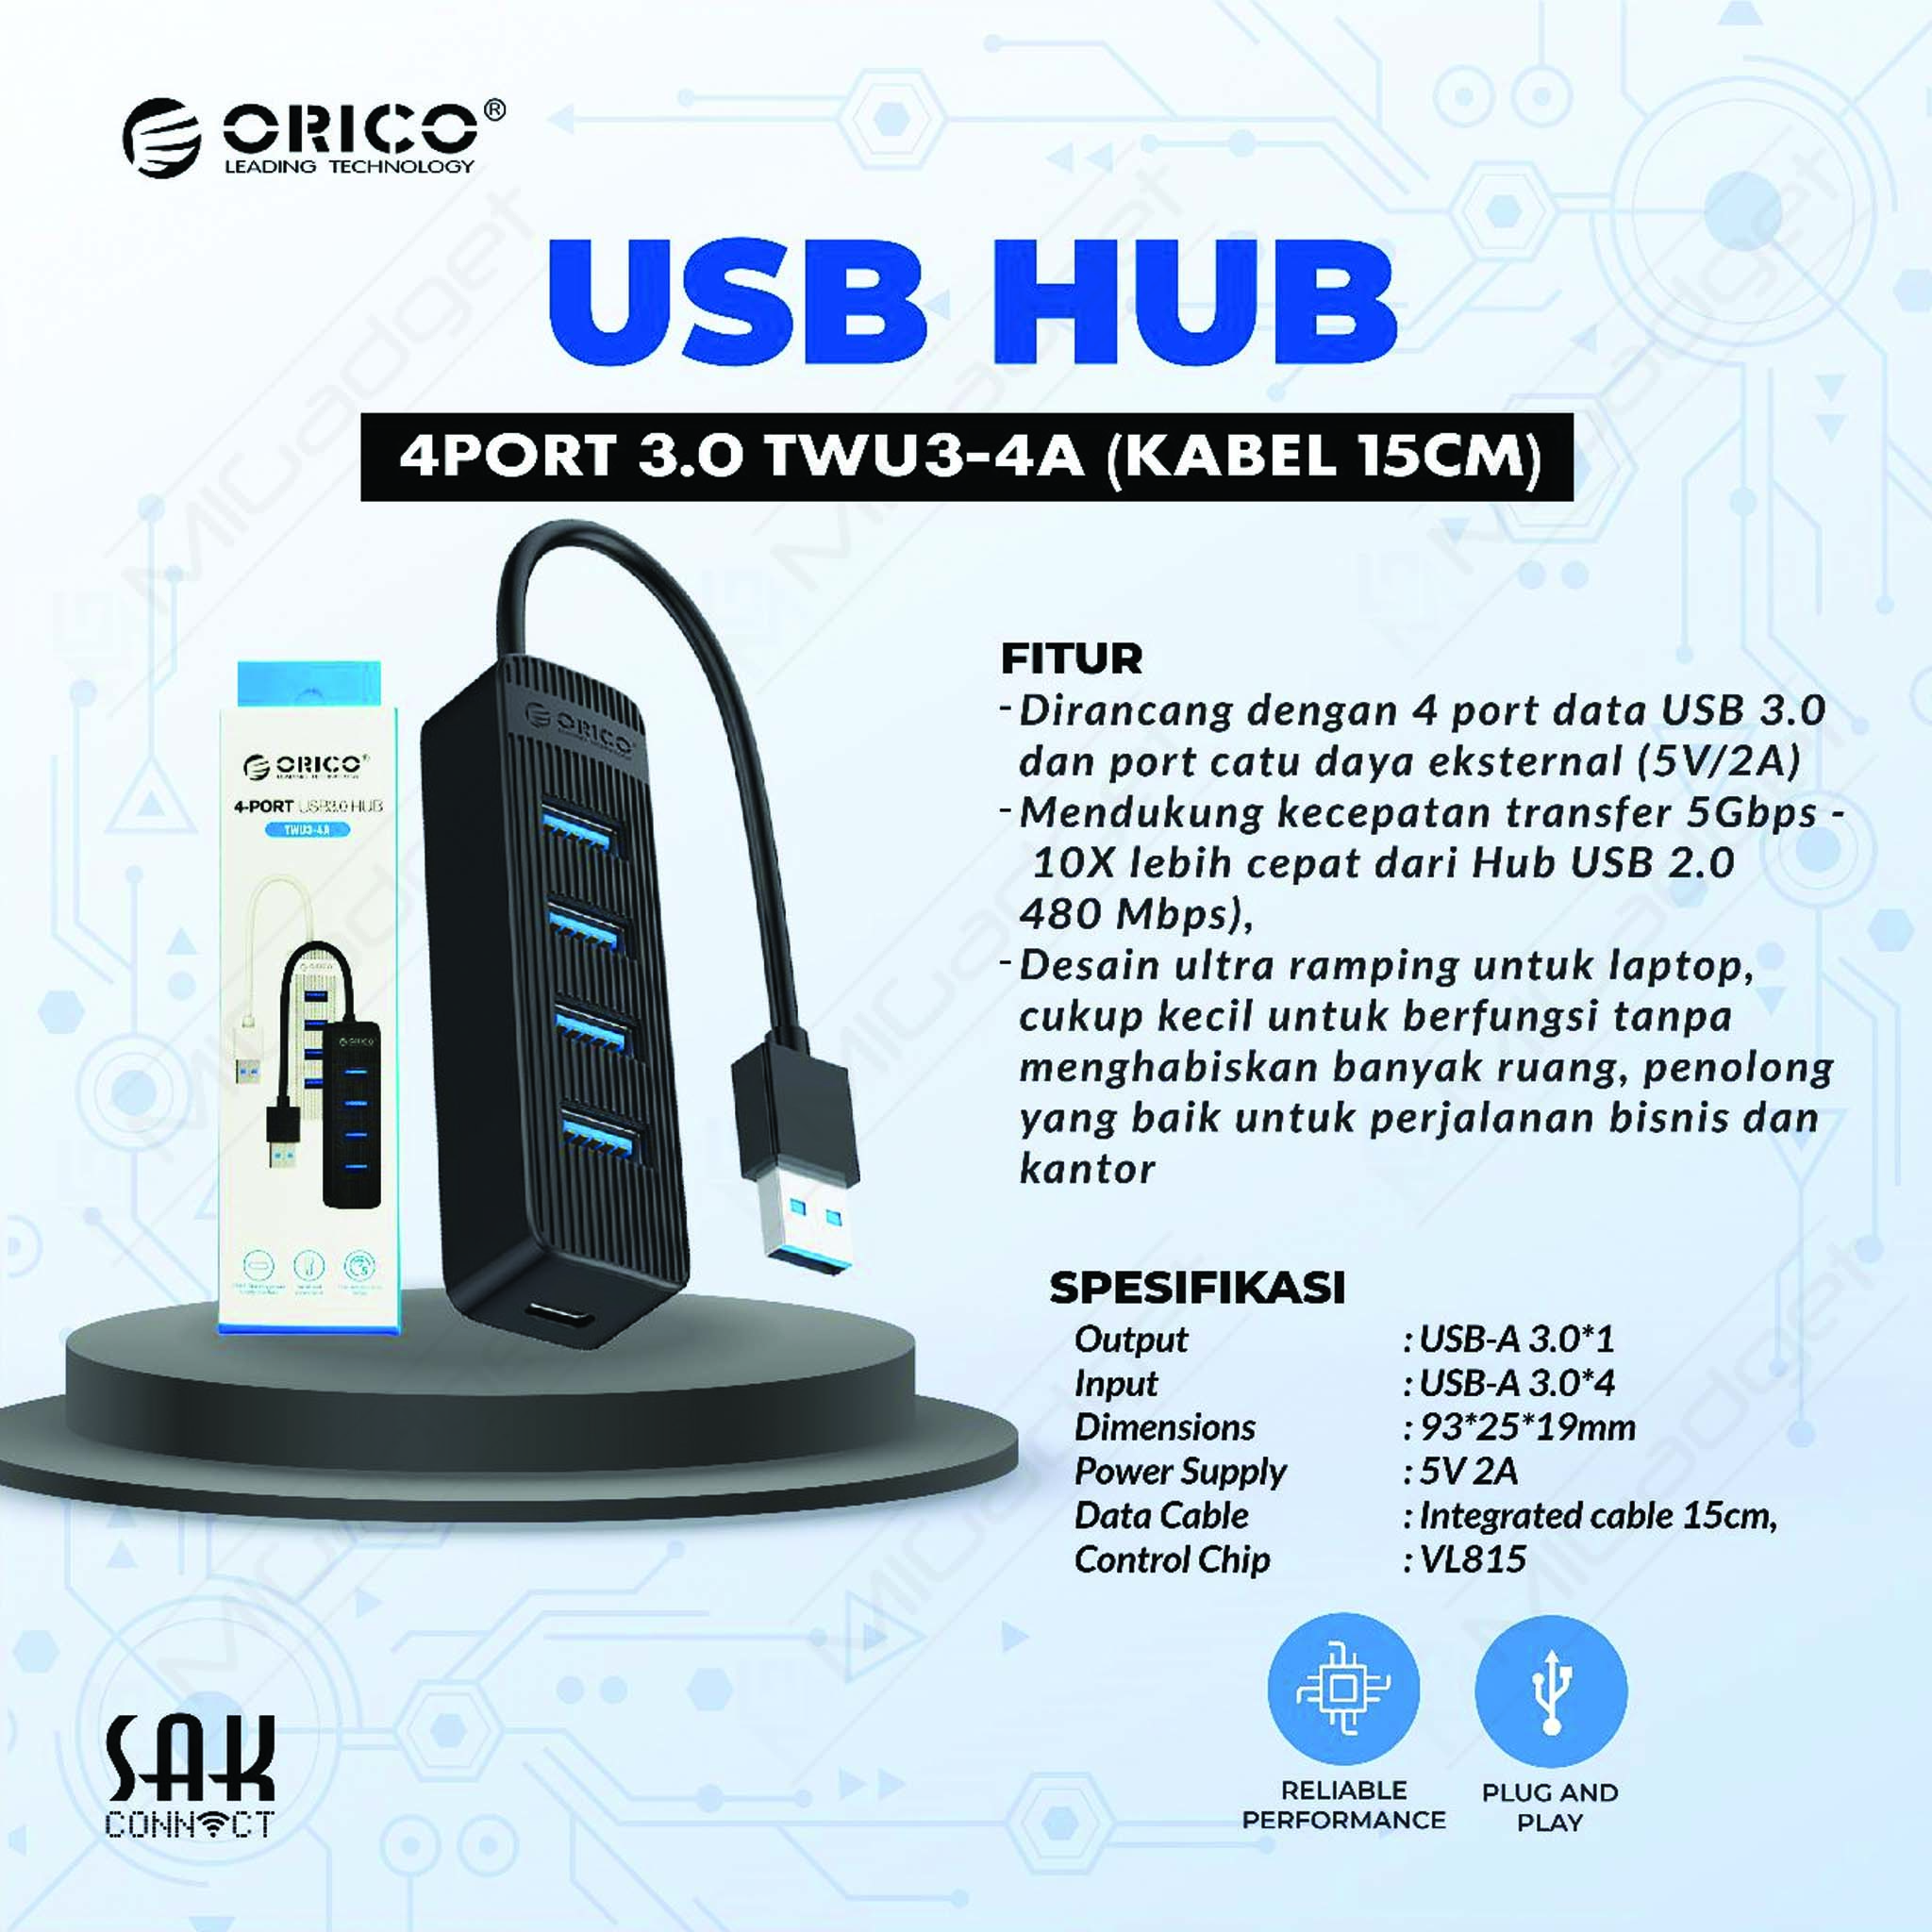 USB 3.0 hub with 4 USB-A ports - additional USB-C power supply - black -  Orico